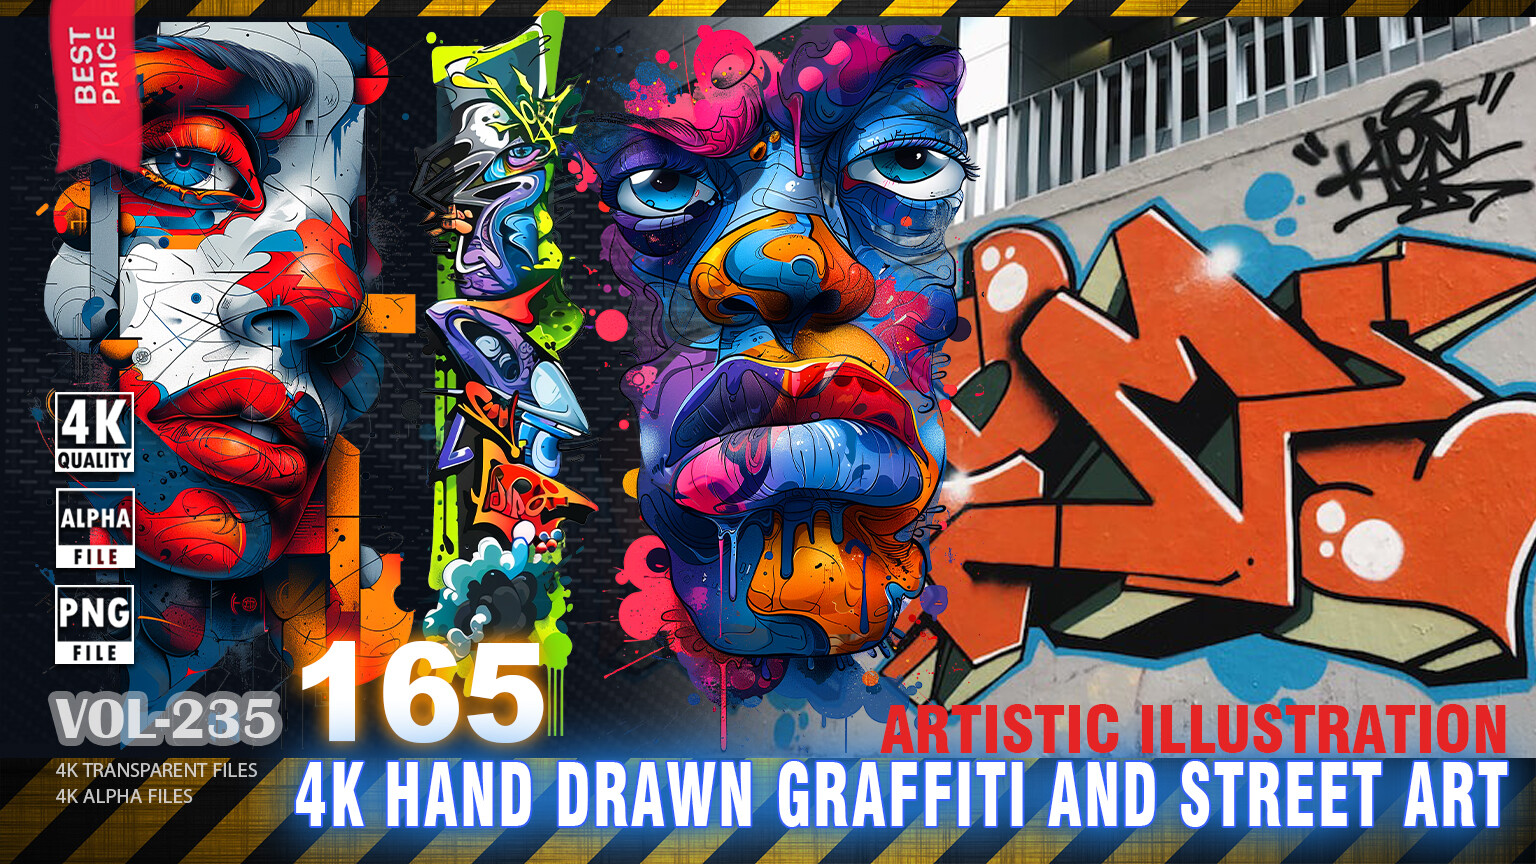 165 4K HAND DRAWN GRAFFITI AND STREET ART ILLUSTRATION - ARTISTIC  ILLUSTRATION - HIGH END QUALITY RES - (TRANSPARENT & ALPHA) - VOL235